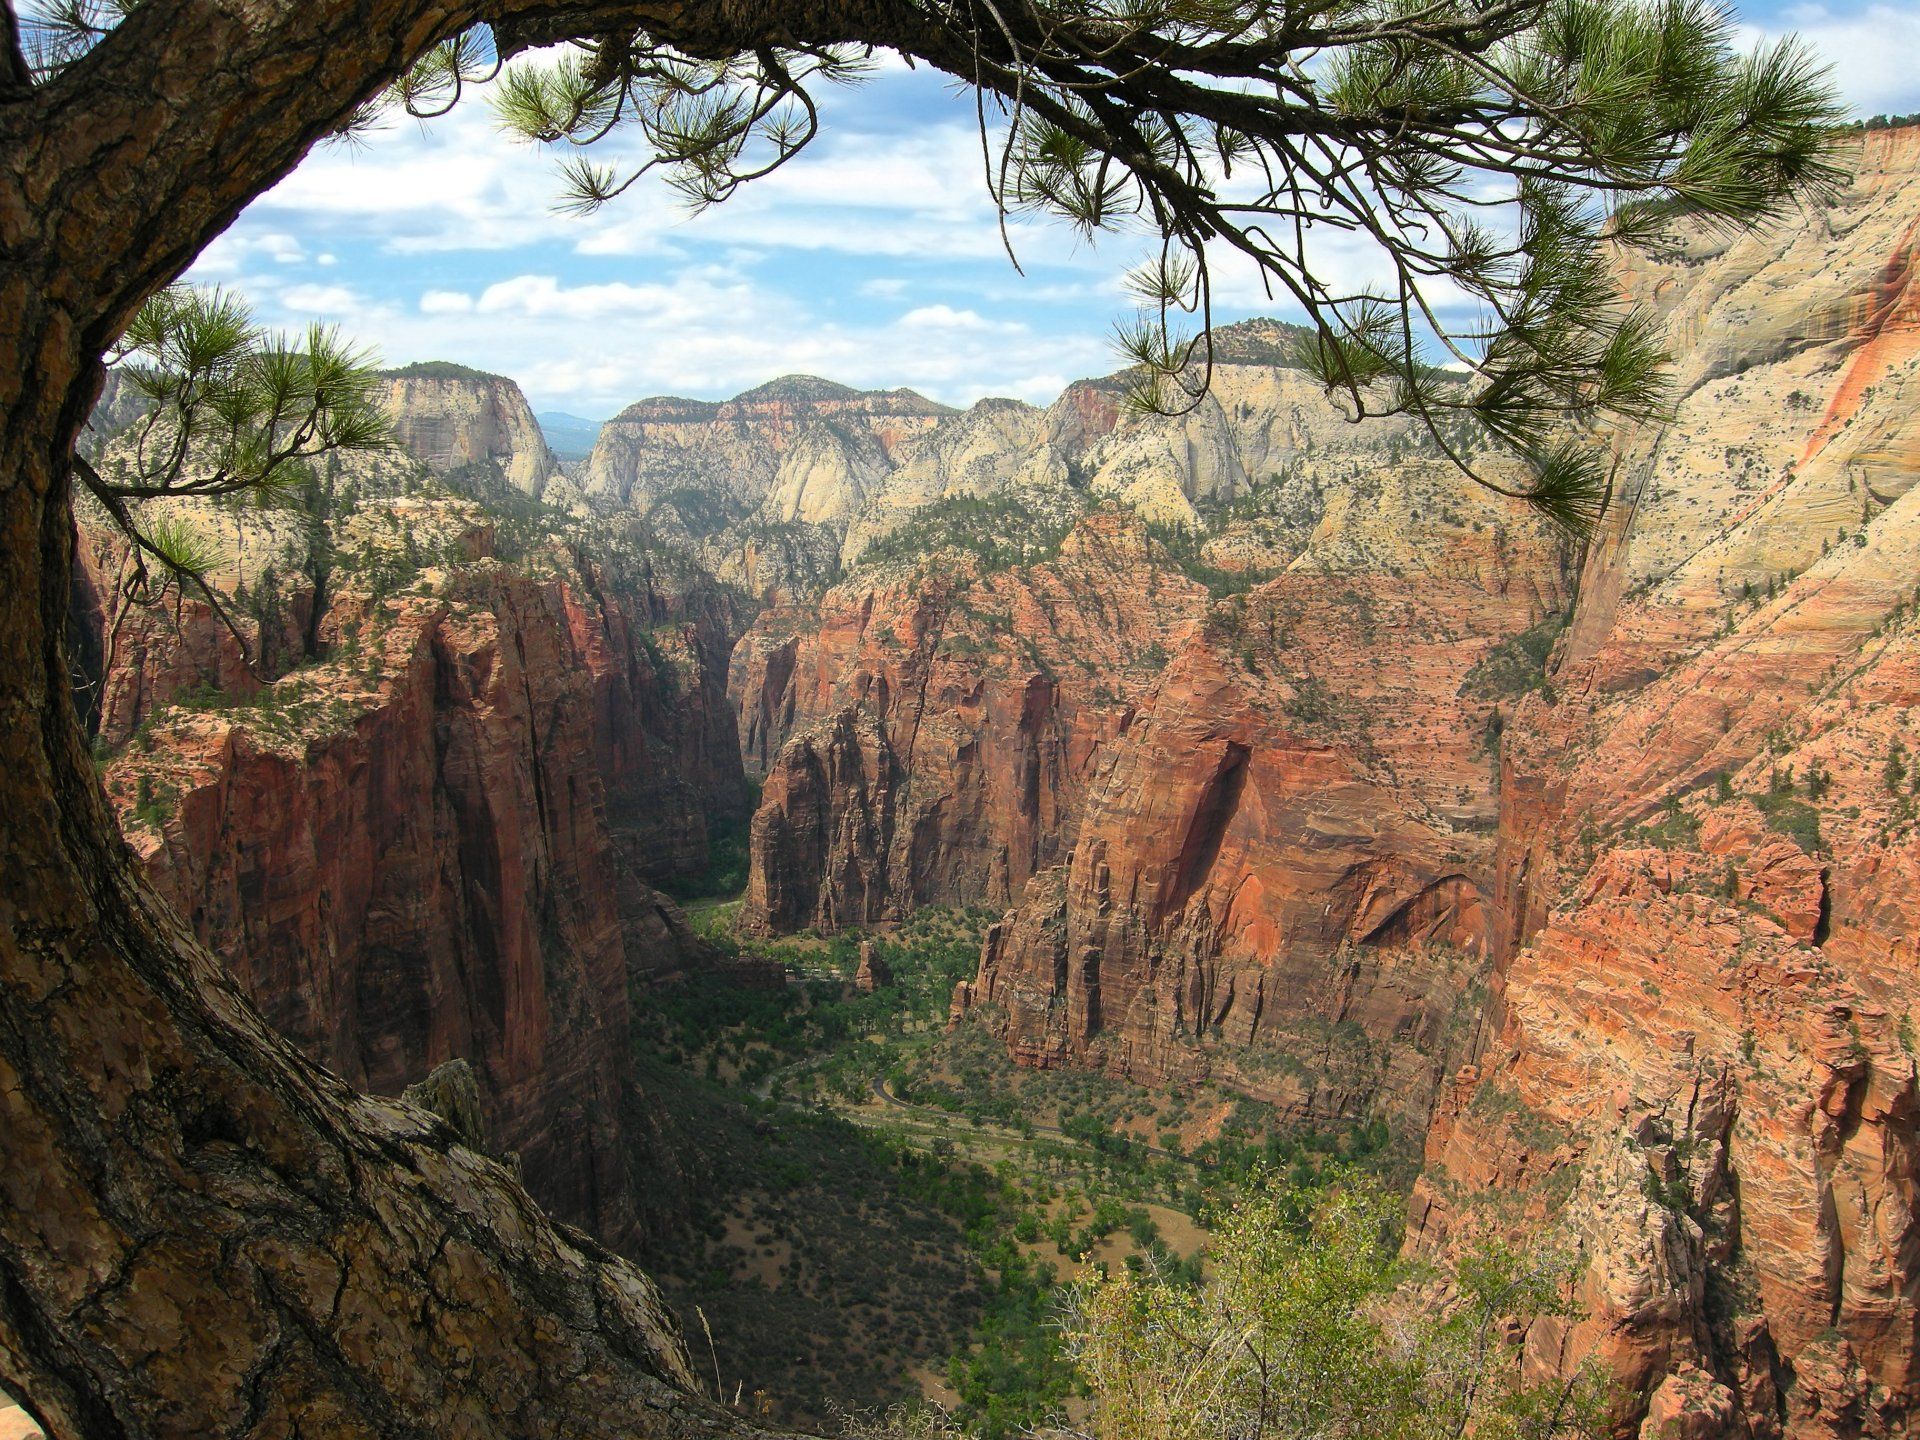 A view of a canyon through a tree branch.